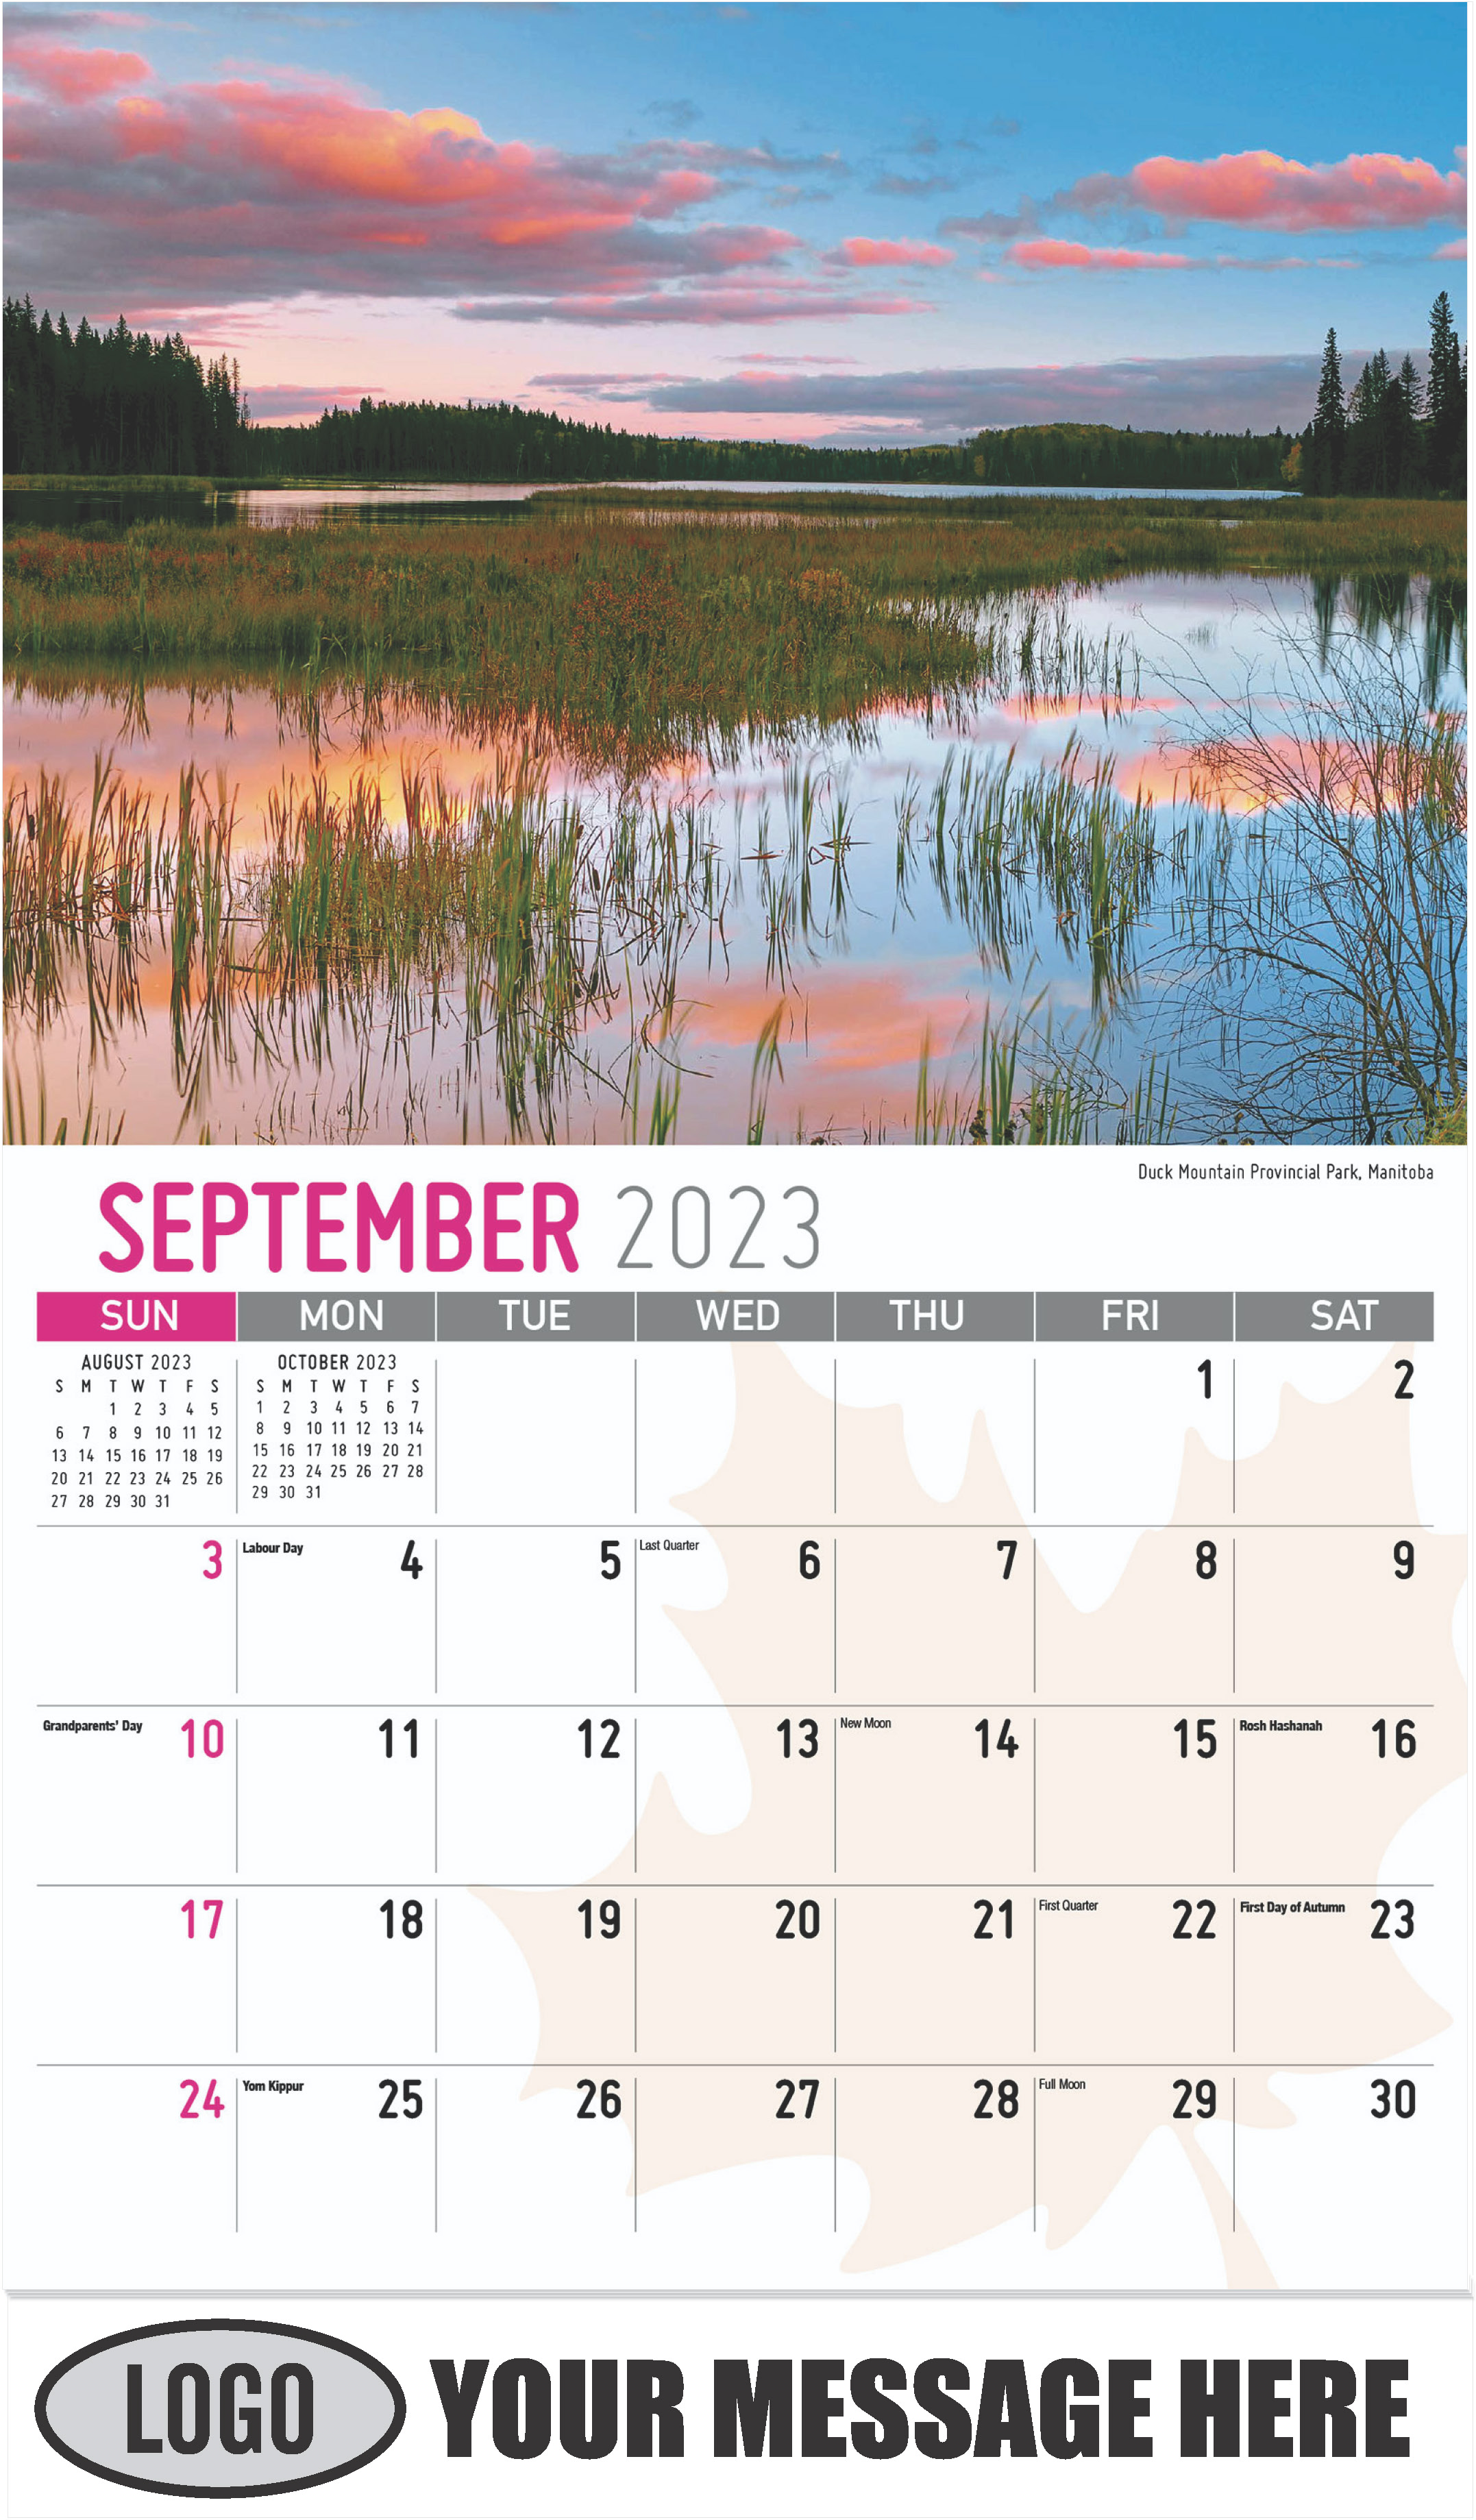 Duck Mountain Provincial Park, Manitoba - September - Scenes of Canada 2023 Promotional Calendar